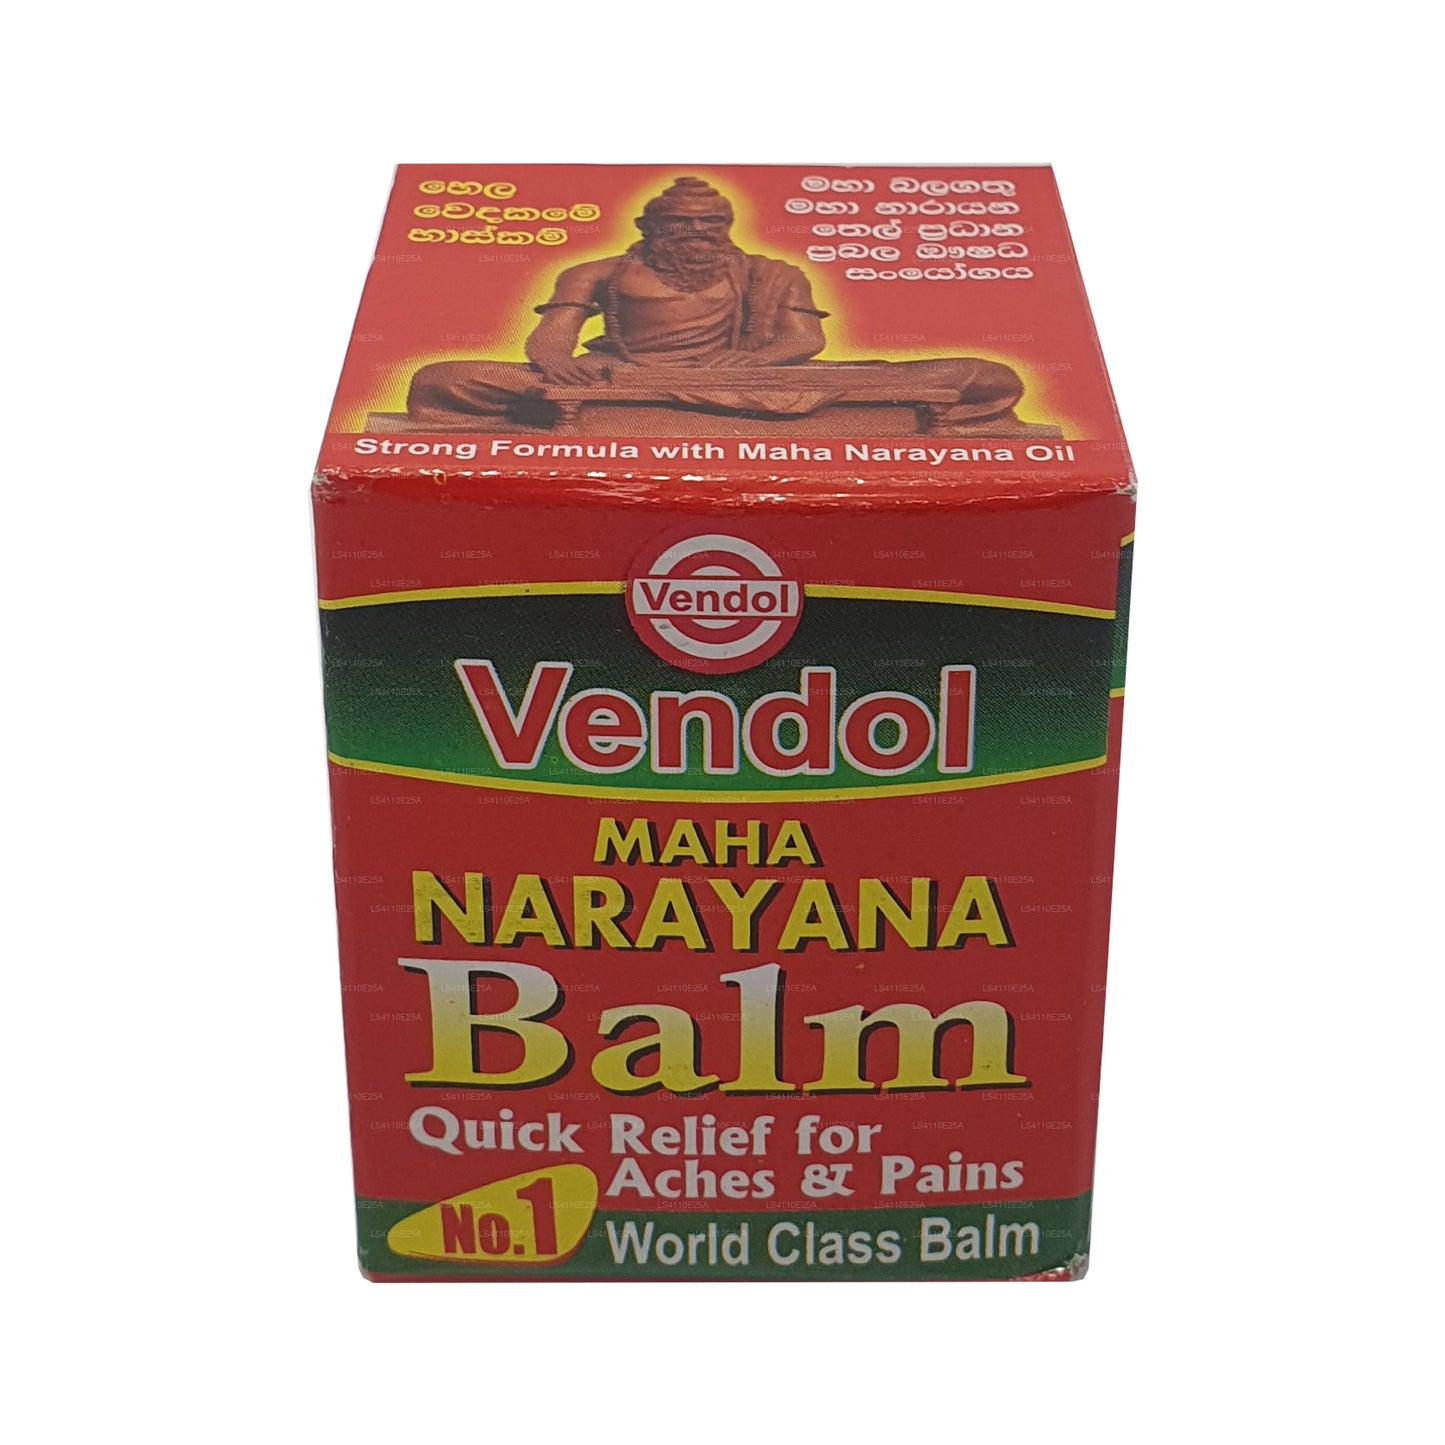 Vendol Maha Narayana palsam (5g)